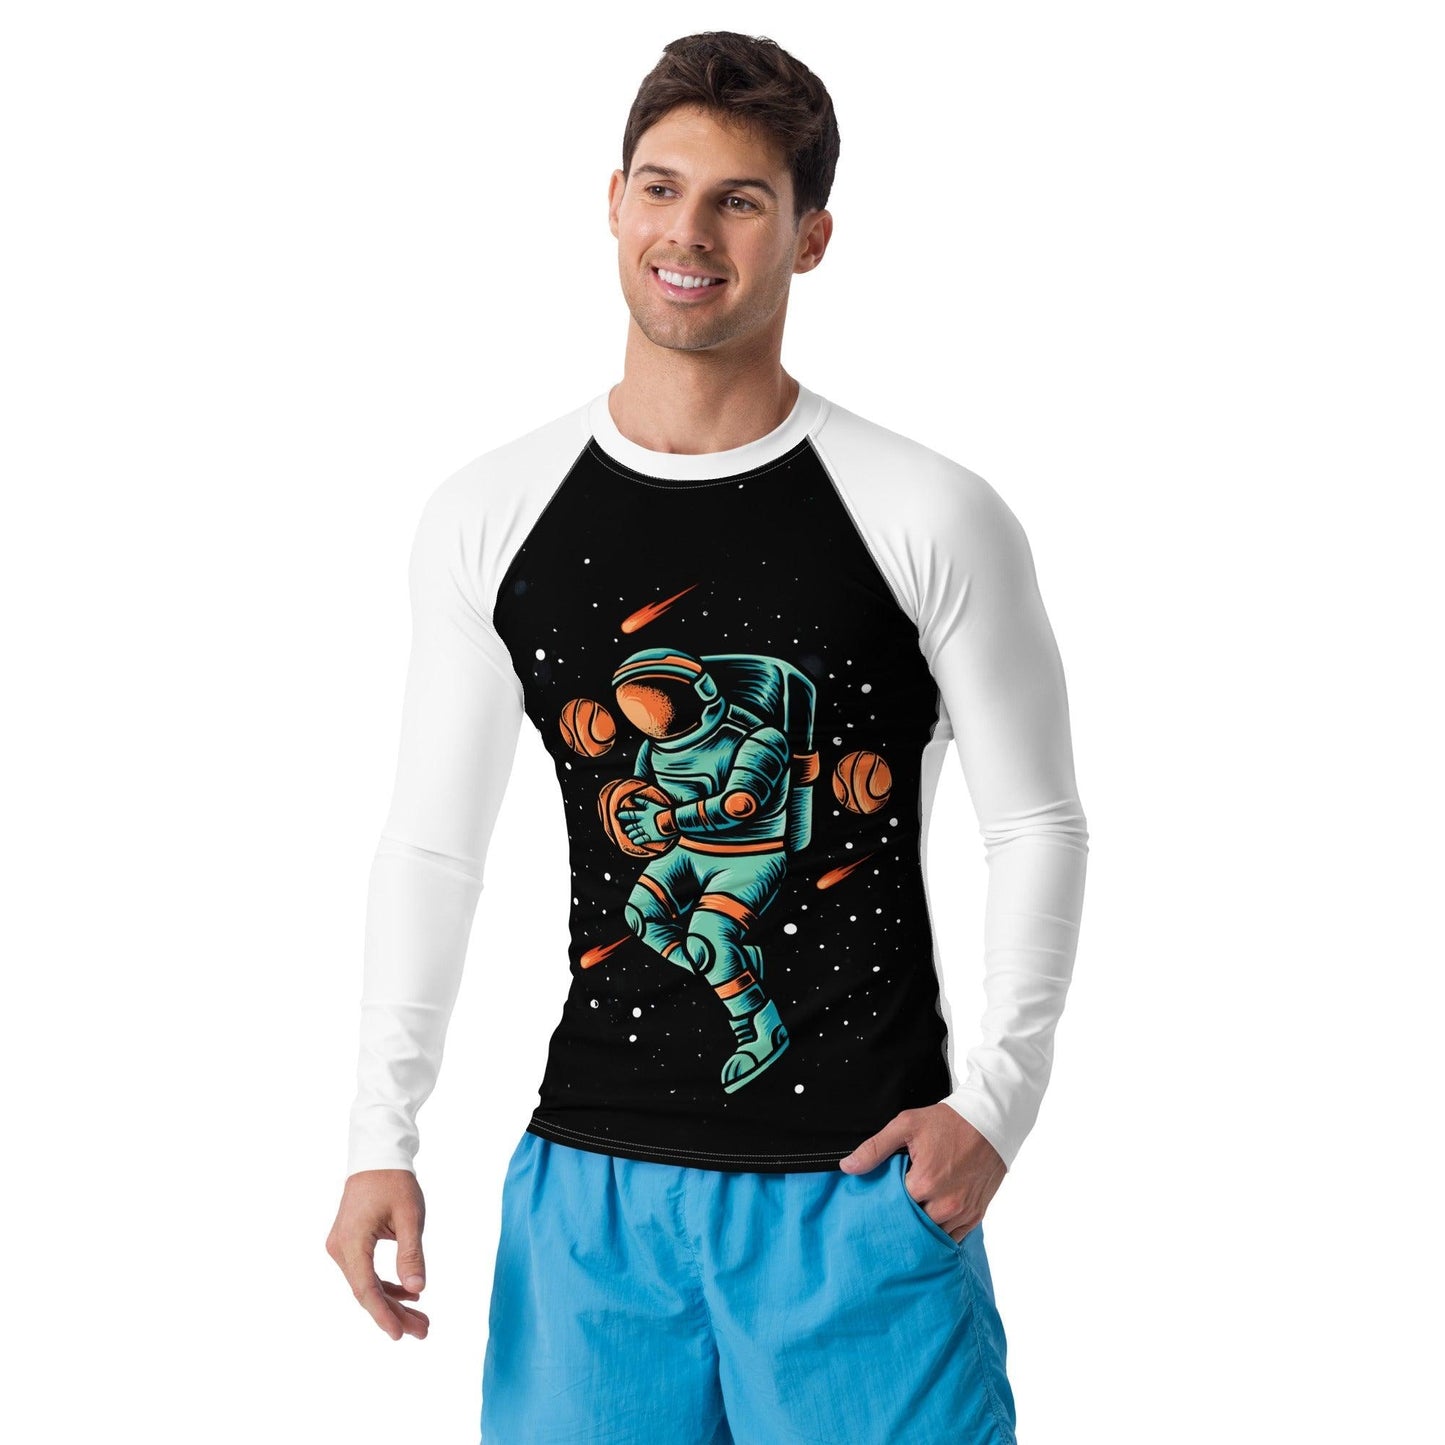 Camiseta técnica "Astro-Basket" - TopShopperSpot